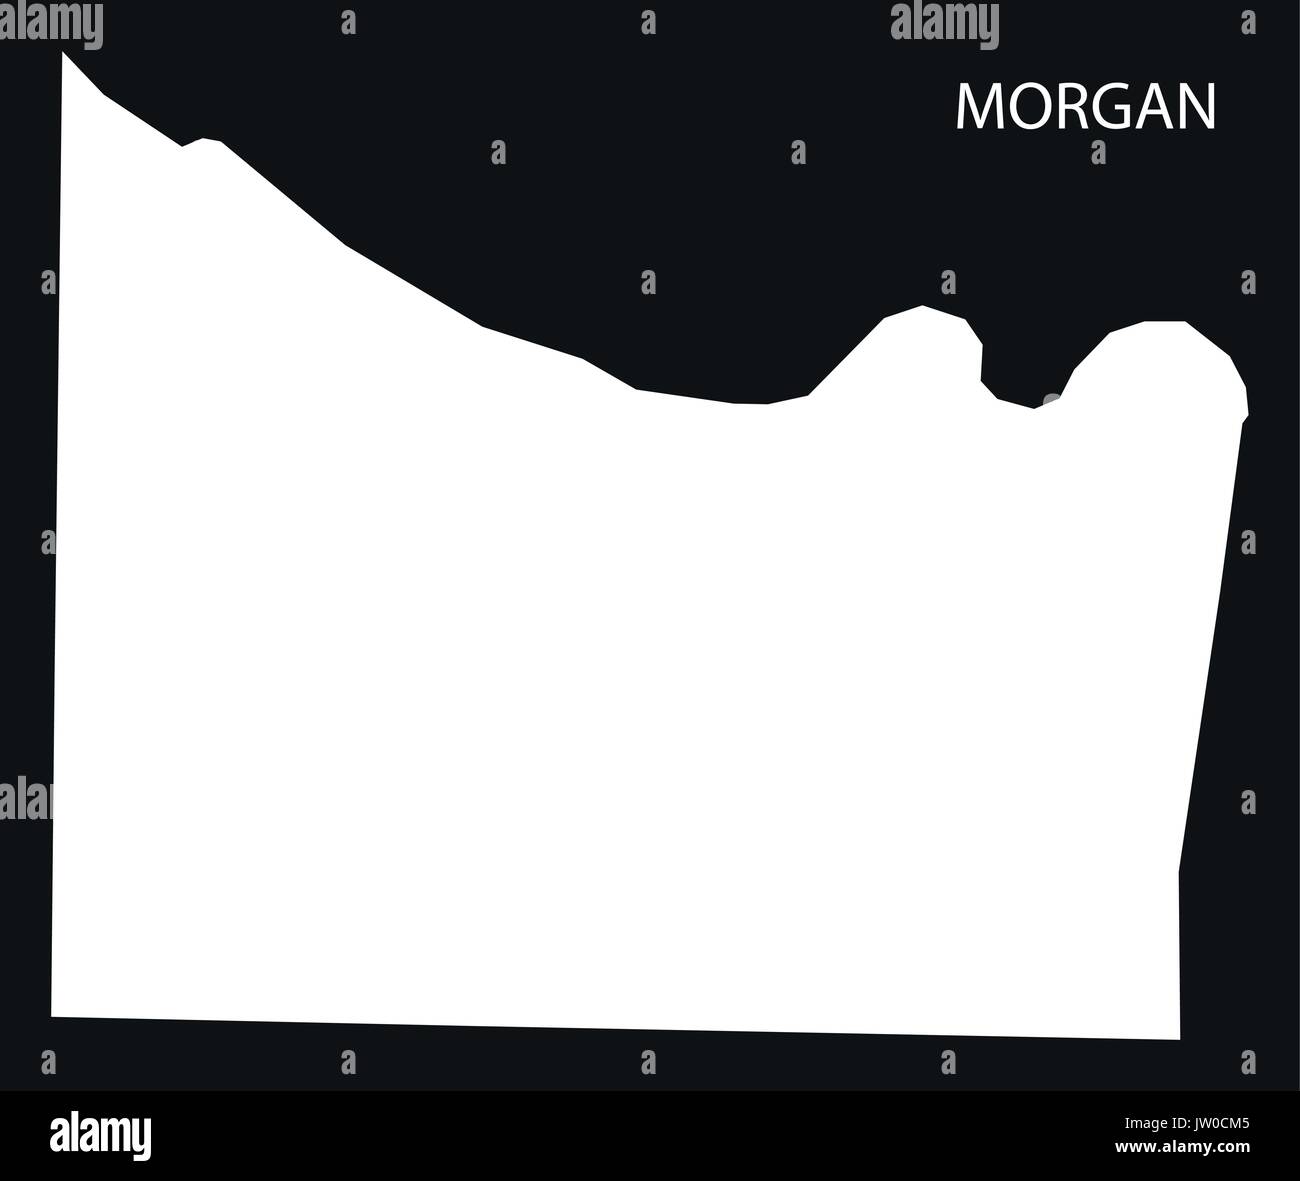 Morgan county map of Alabama USA black inverted illustration Stock Vector